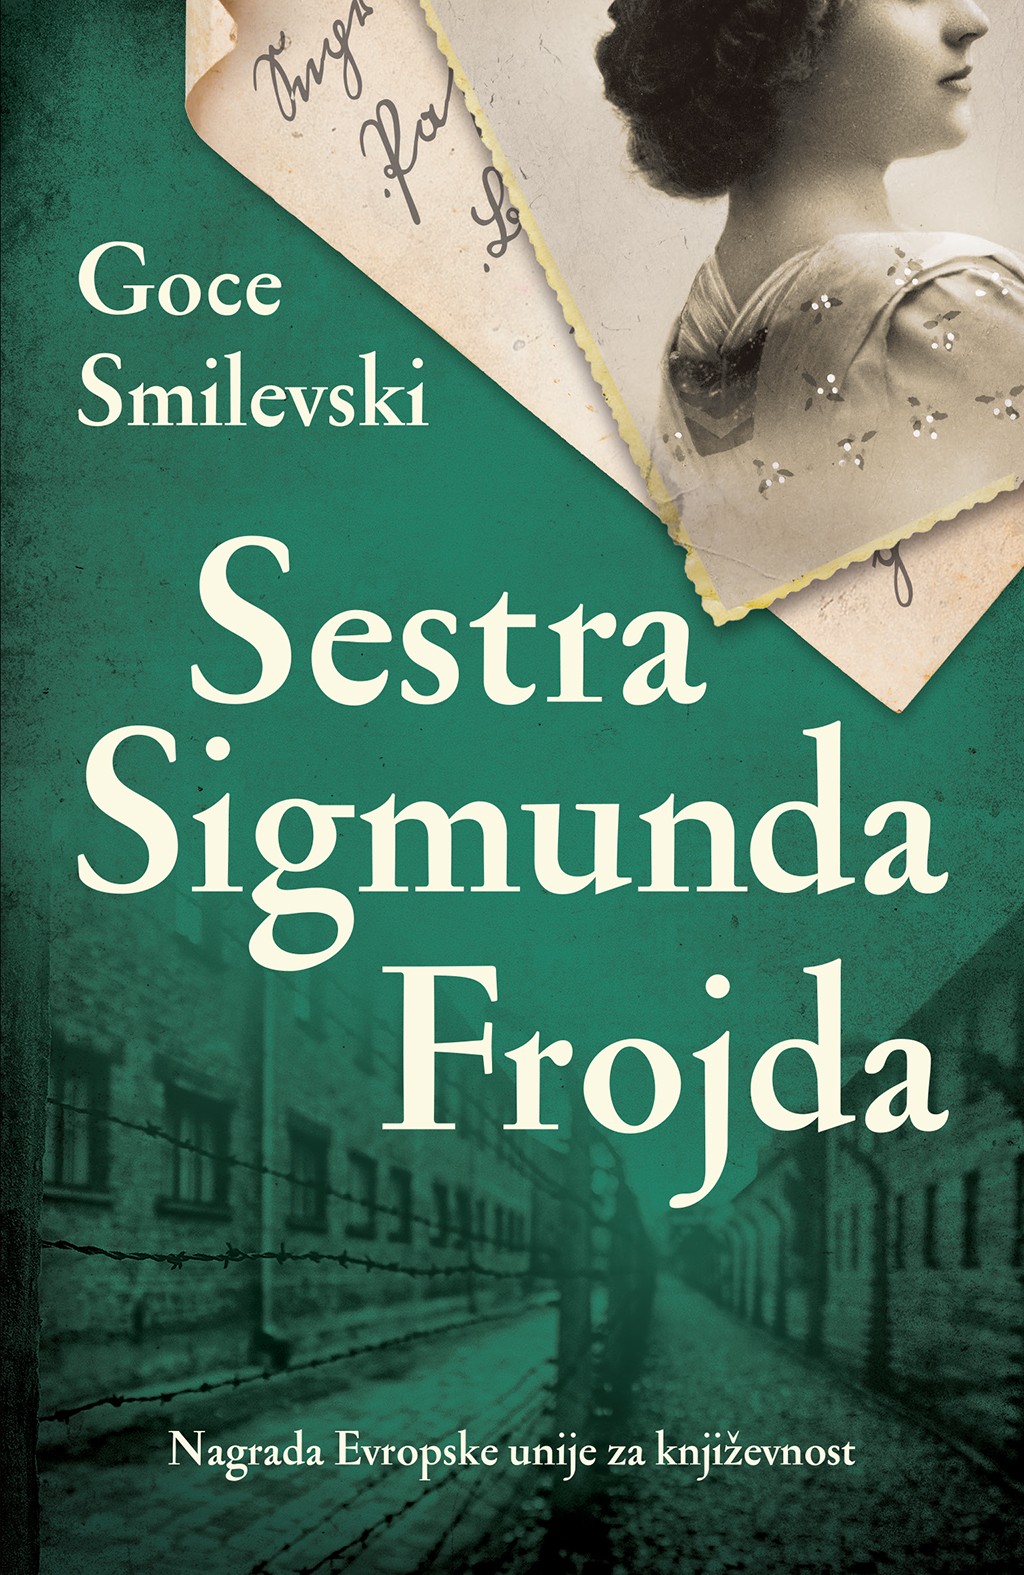 Potresan roman o sudbini porodice Sigmunda Frojda